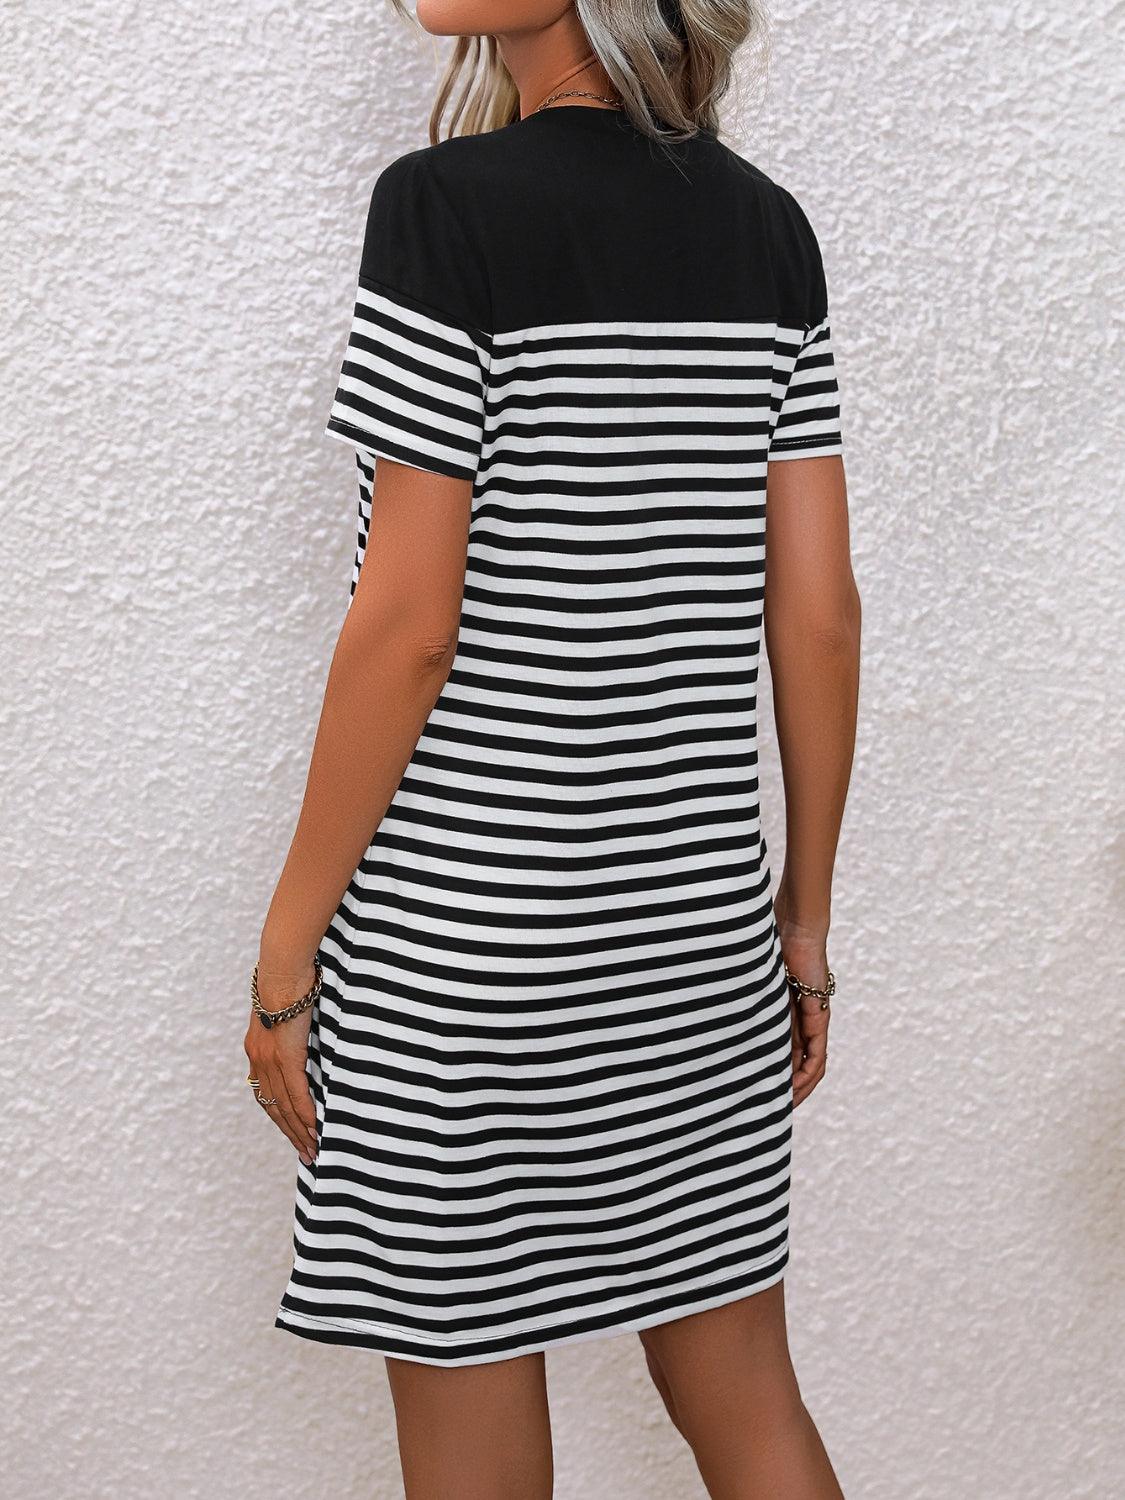 Women's Dresses Striped Round Neck Short Sleeve Mini Tee Dress